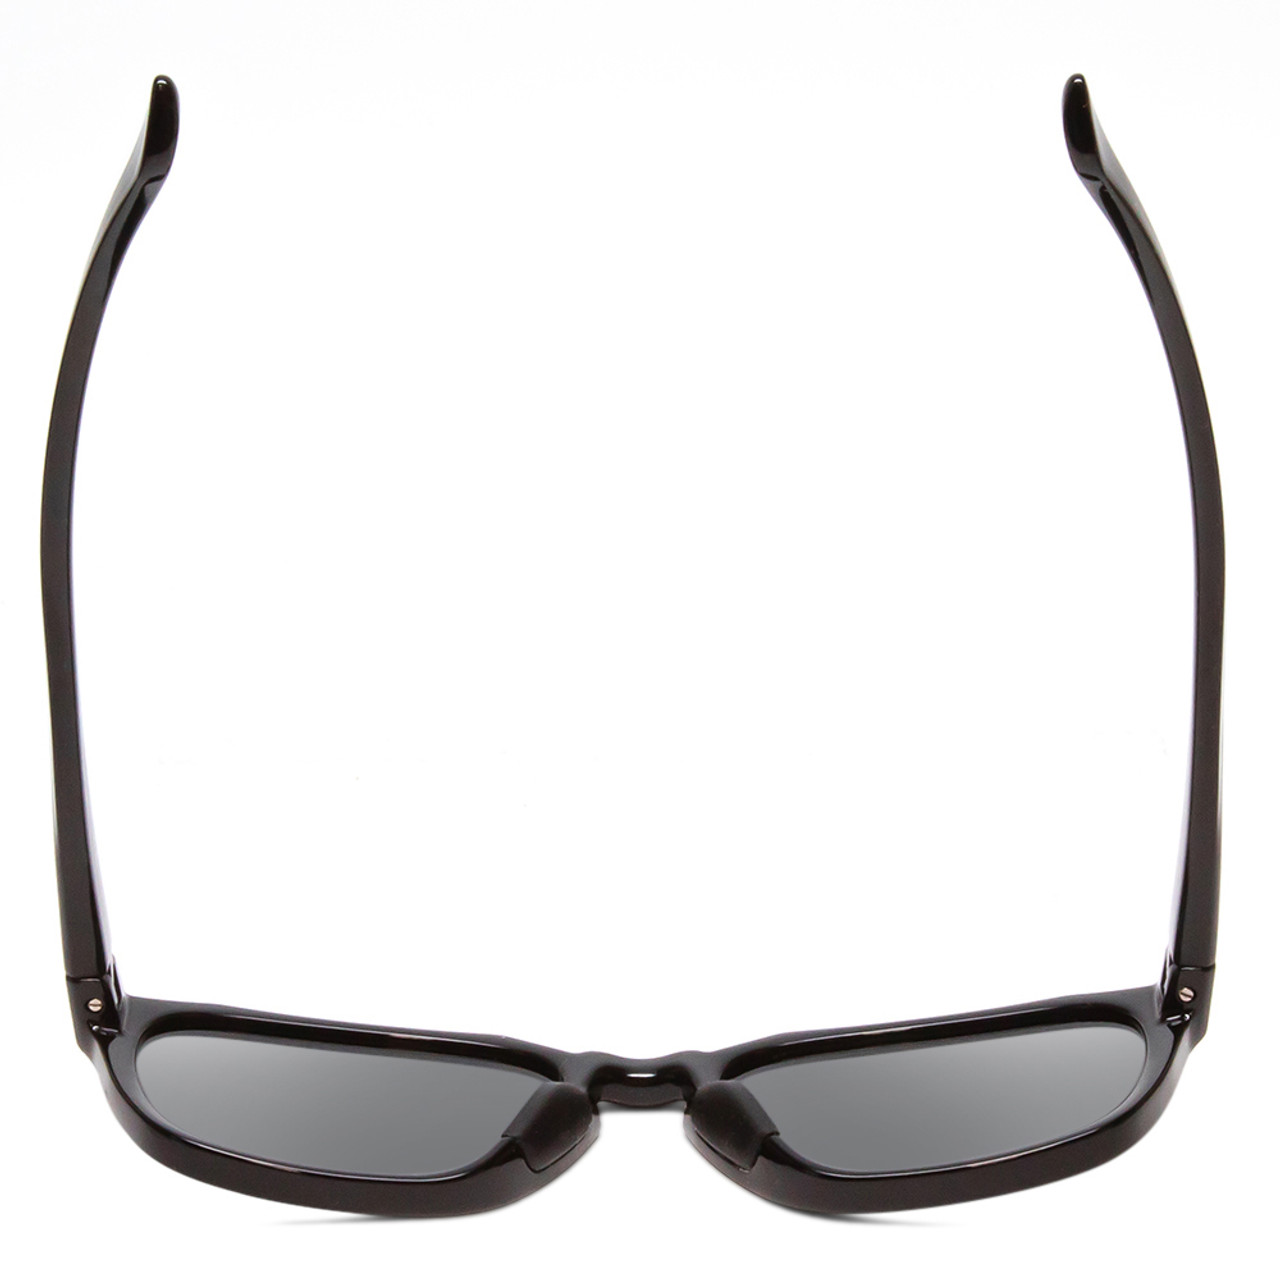 Top View of Smith Optics Contour Unisex Square Designer Sunglasses Black/Polarized Gray 56mm